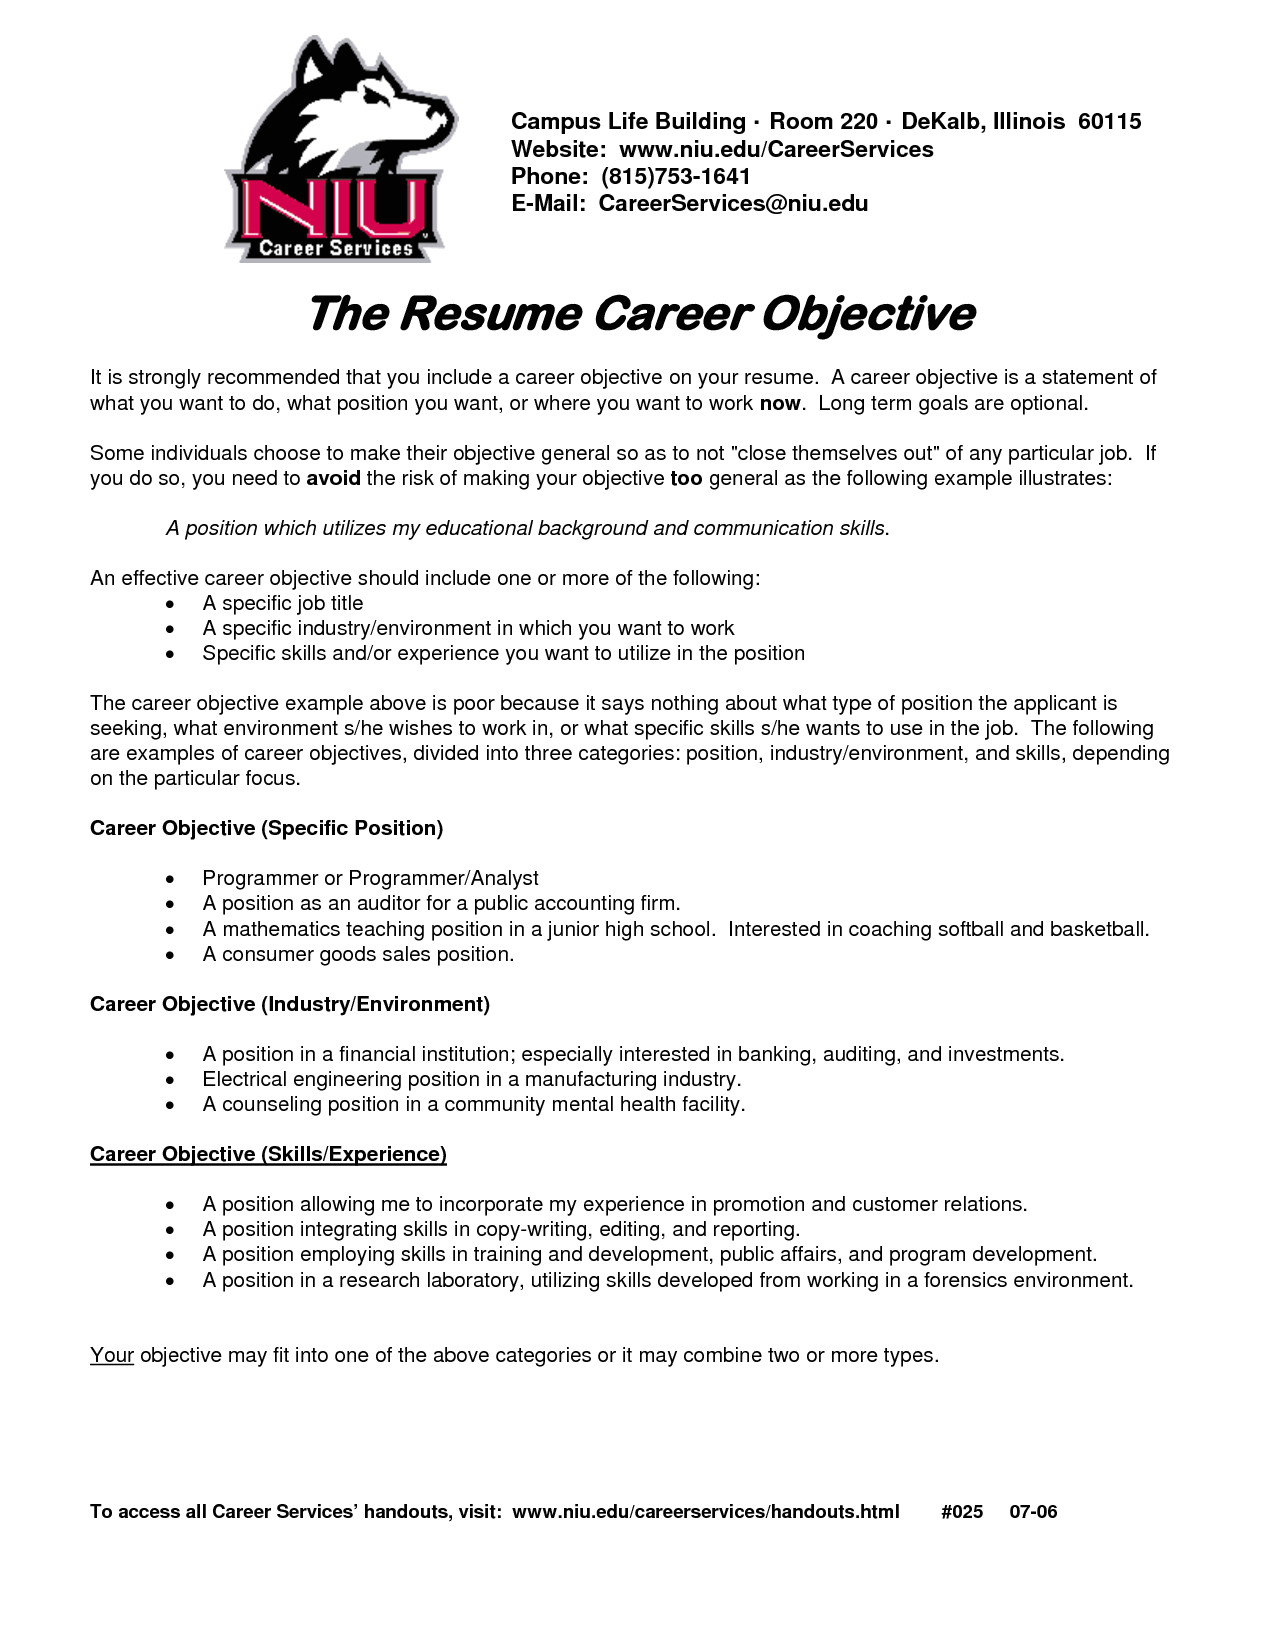 essay on career goals objectives